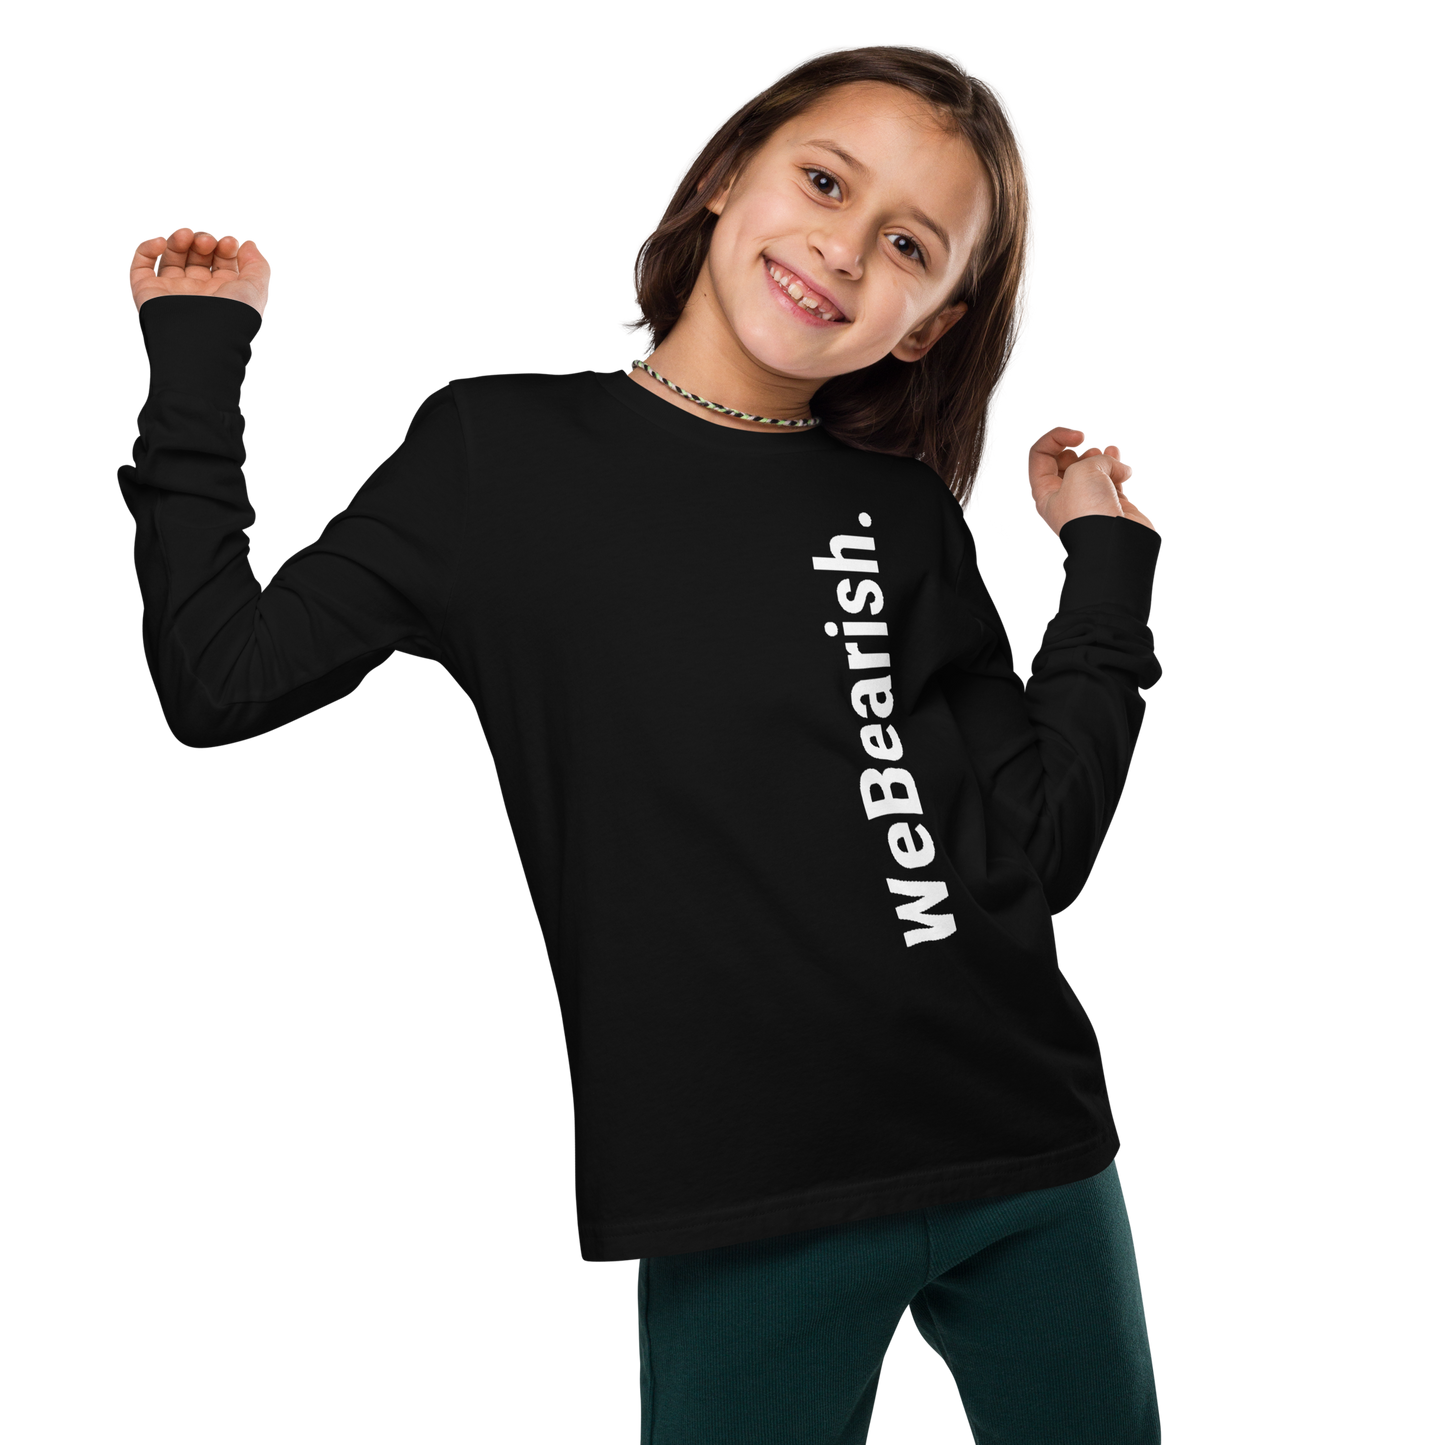 WeBearish Kid's Long-Sleeve T-shirt (Black/White)